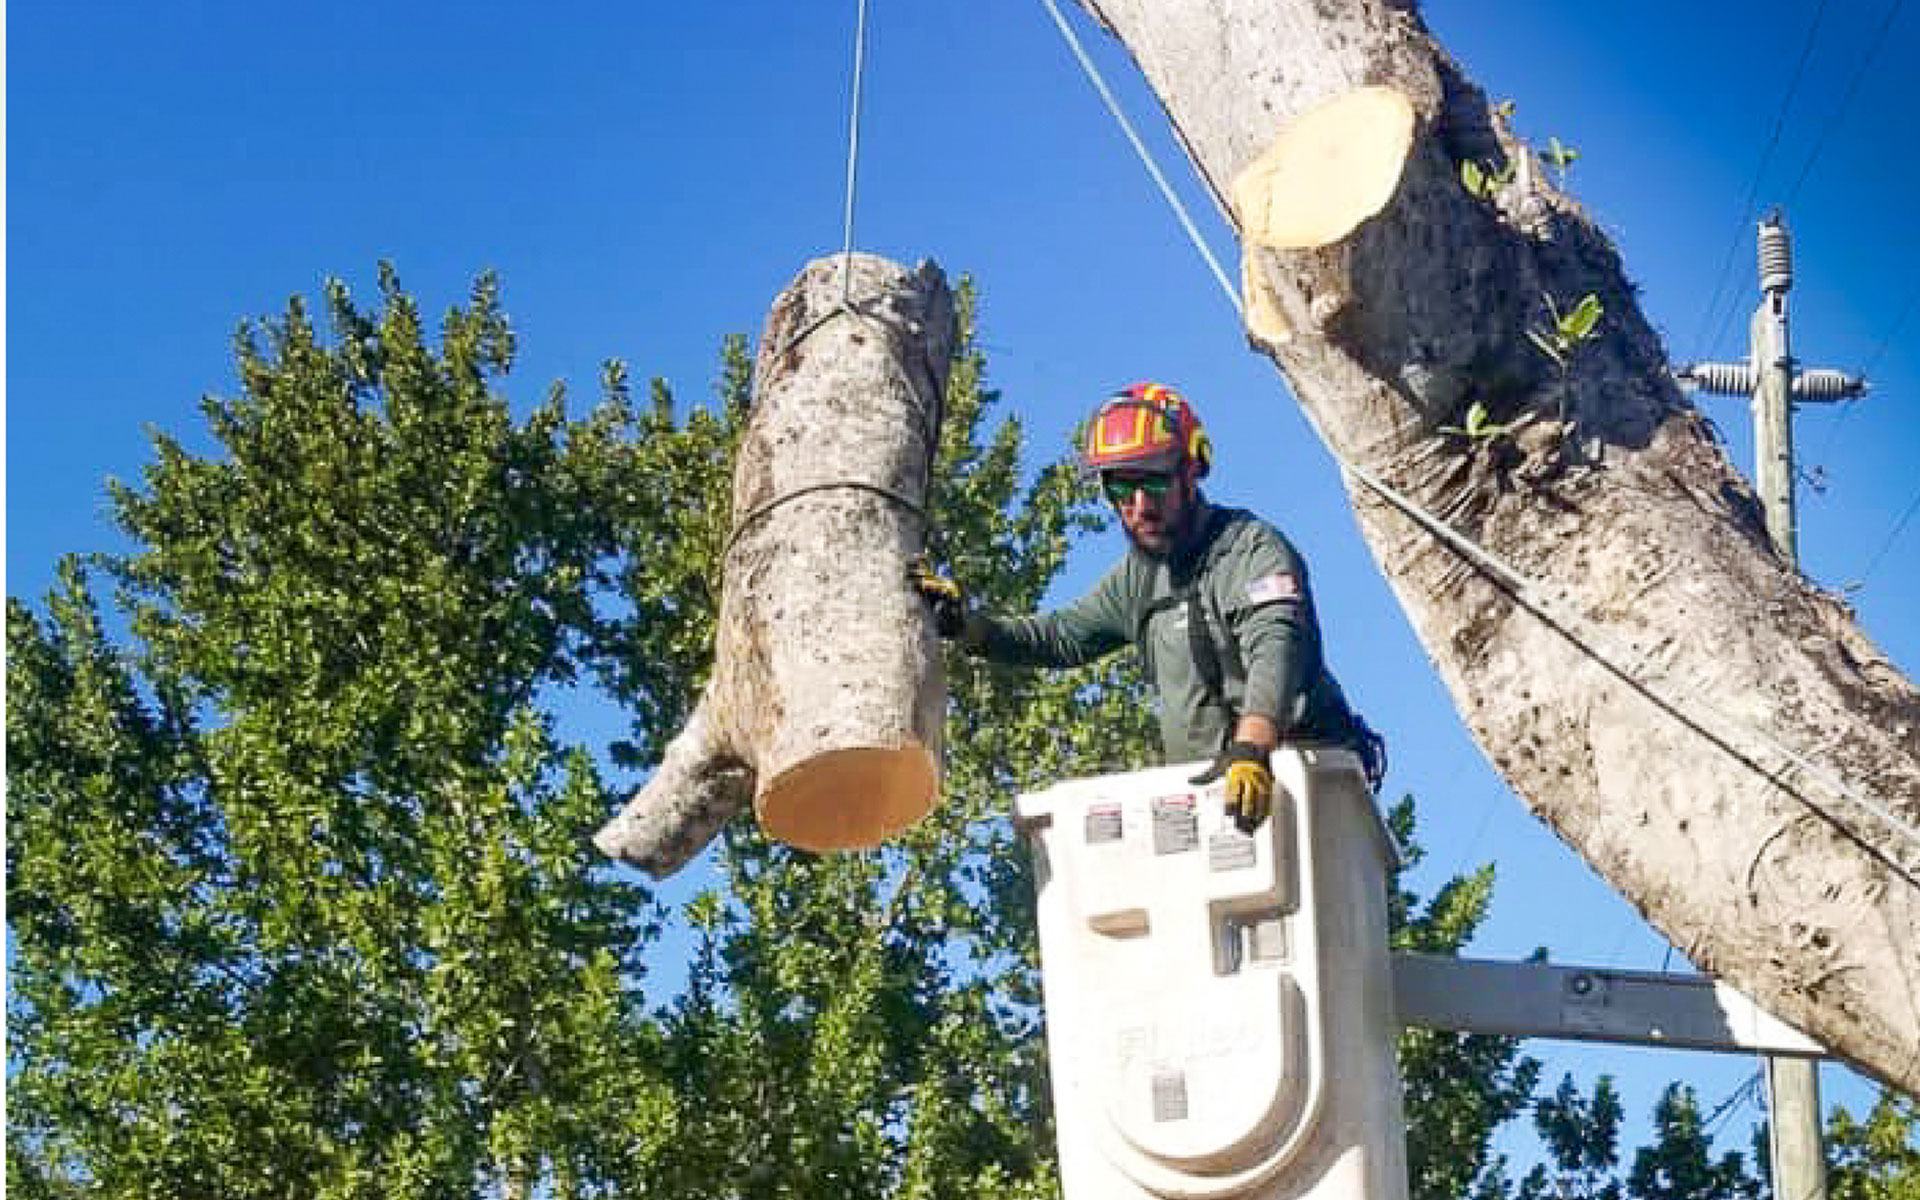 Tree Removal Service